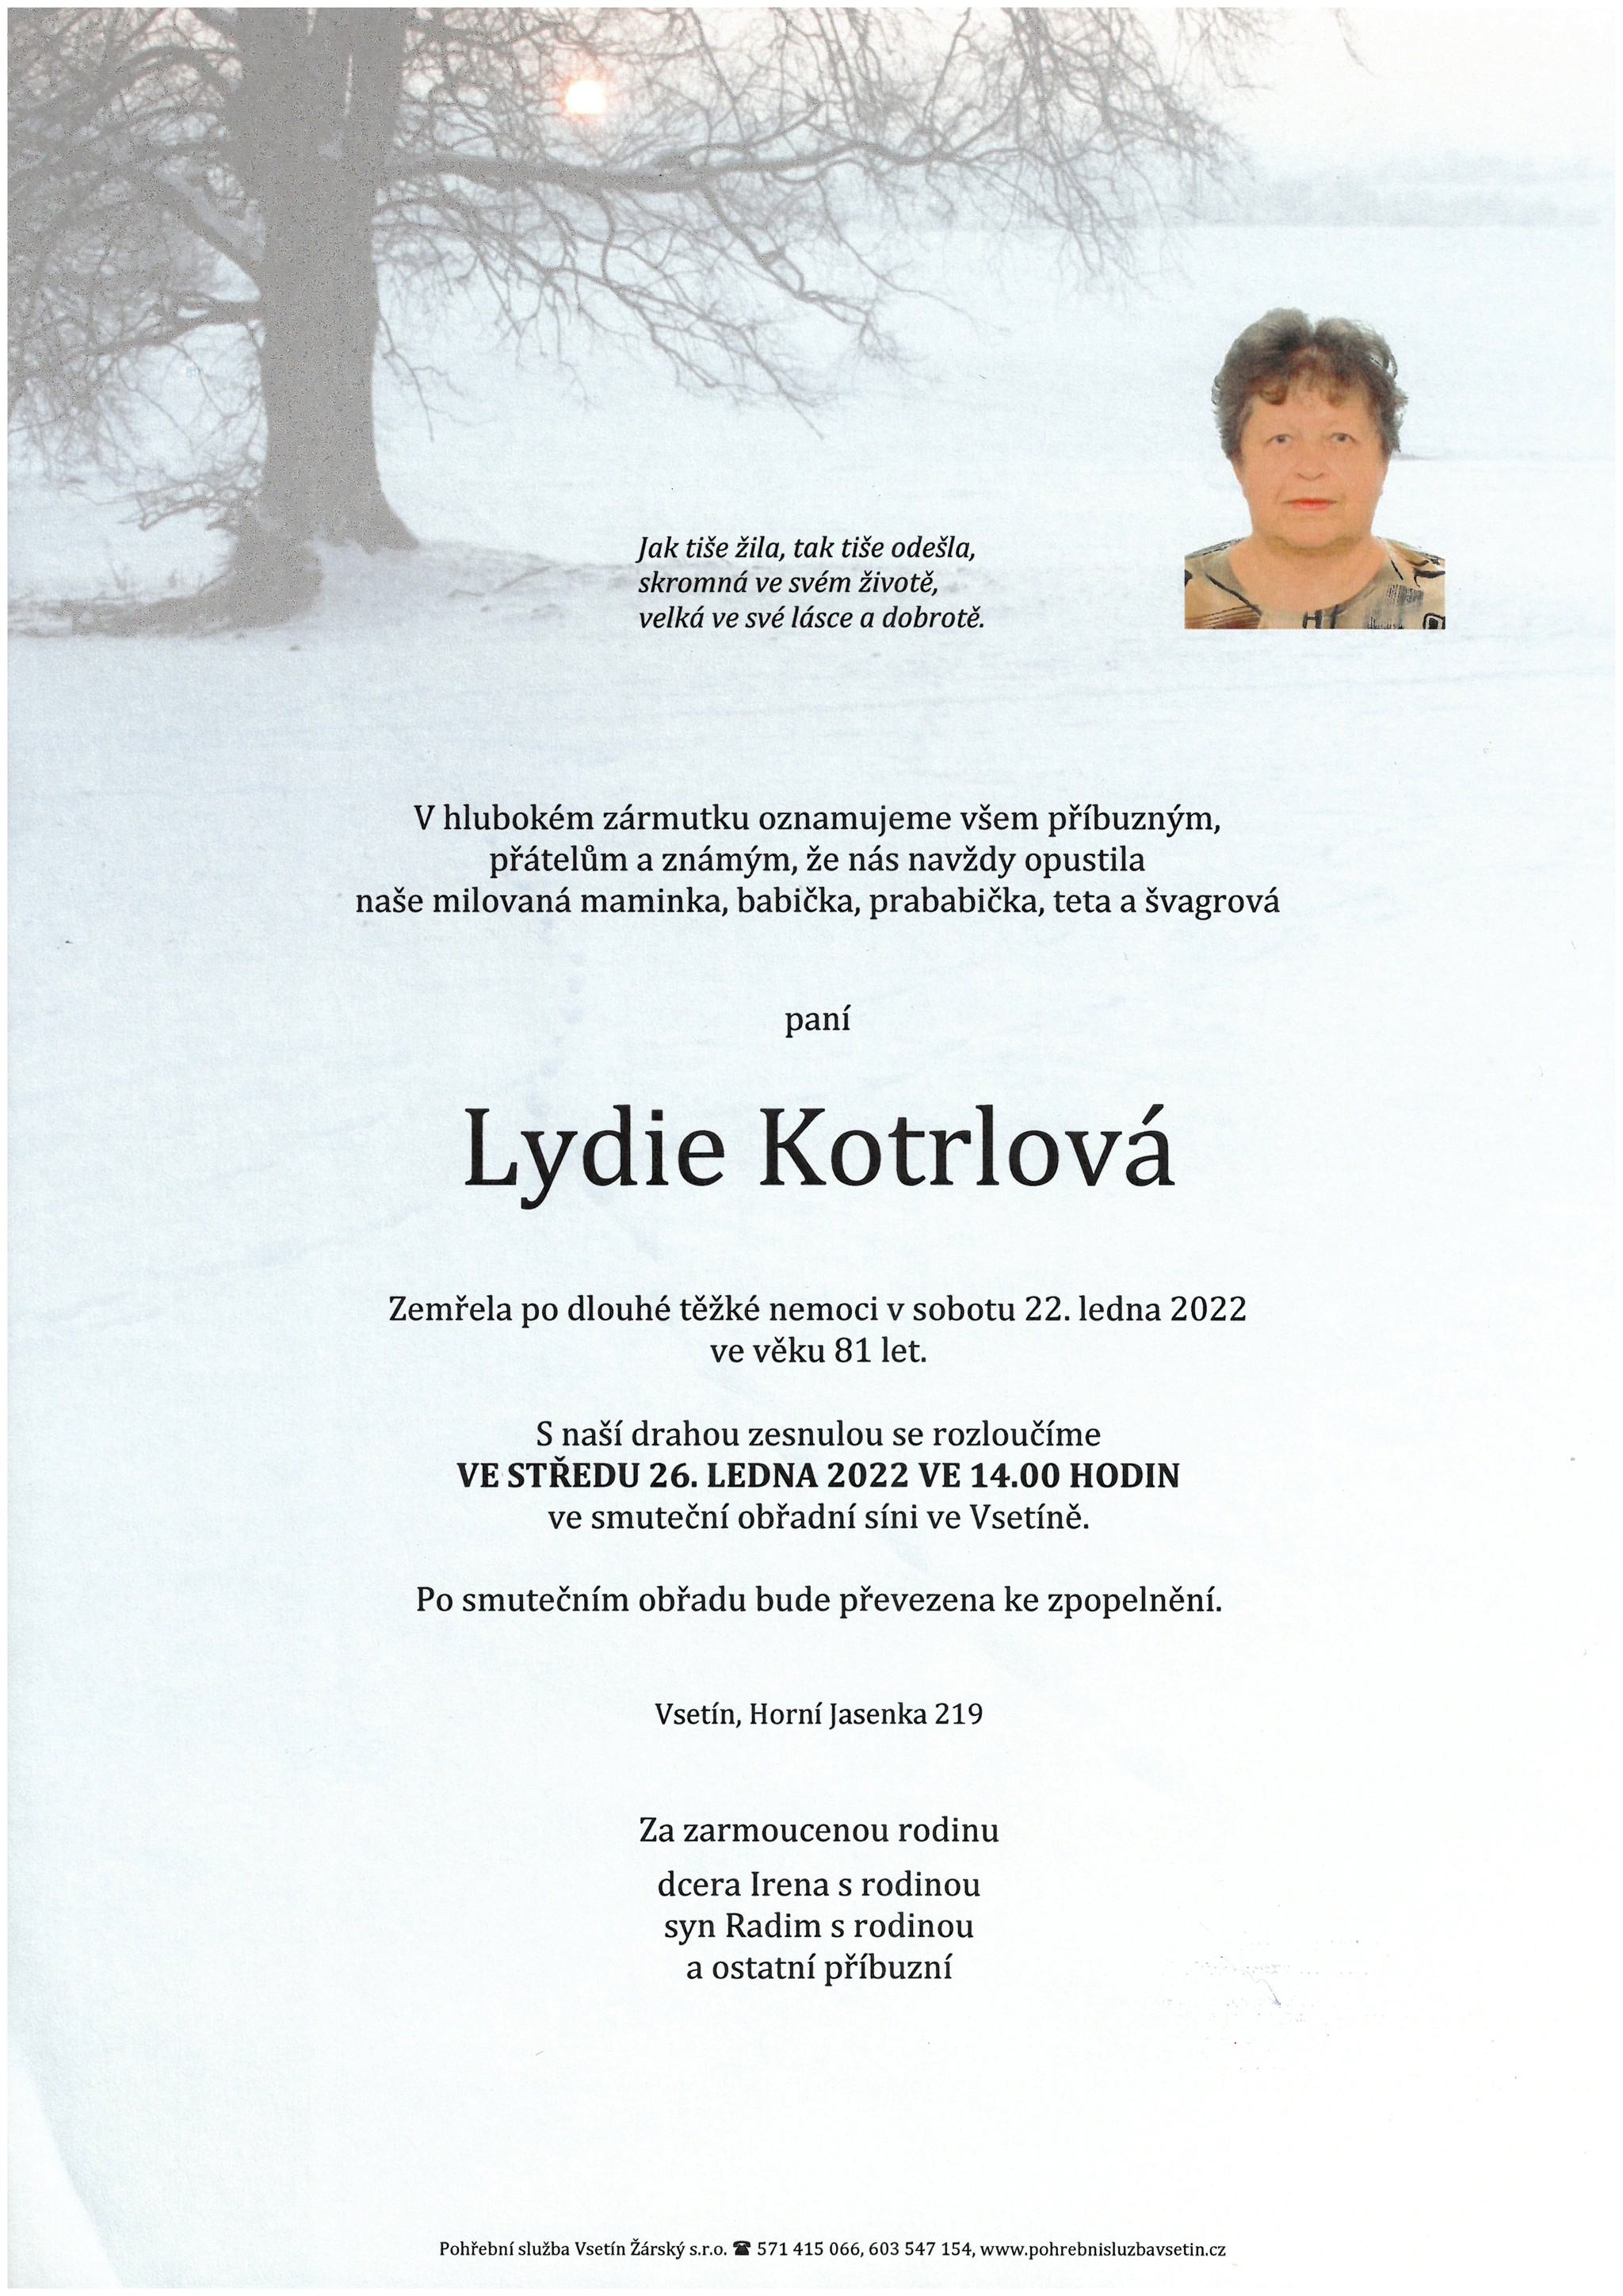 Lydie Kotrlová